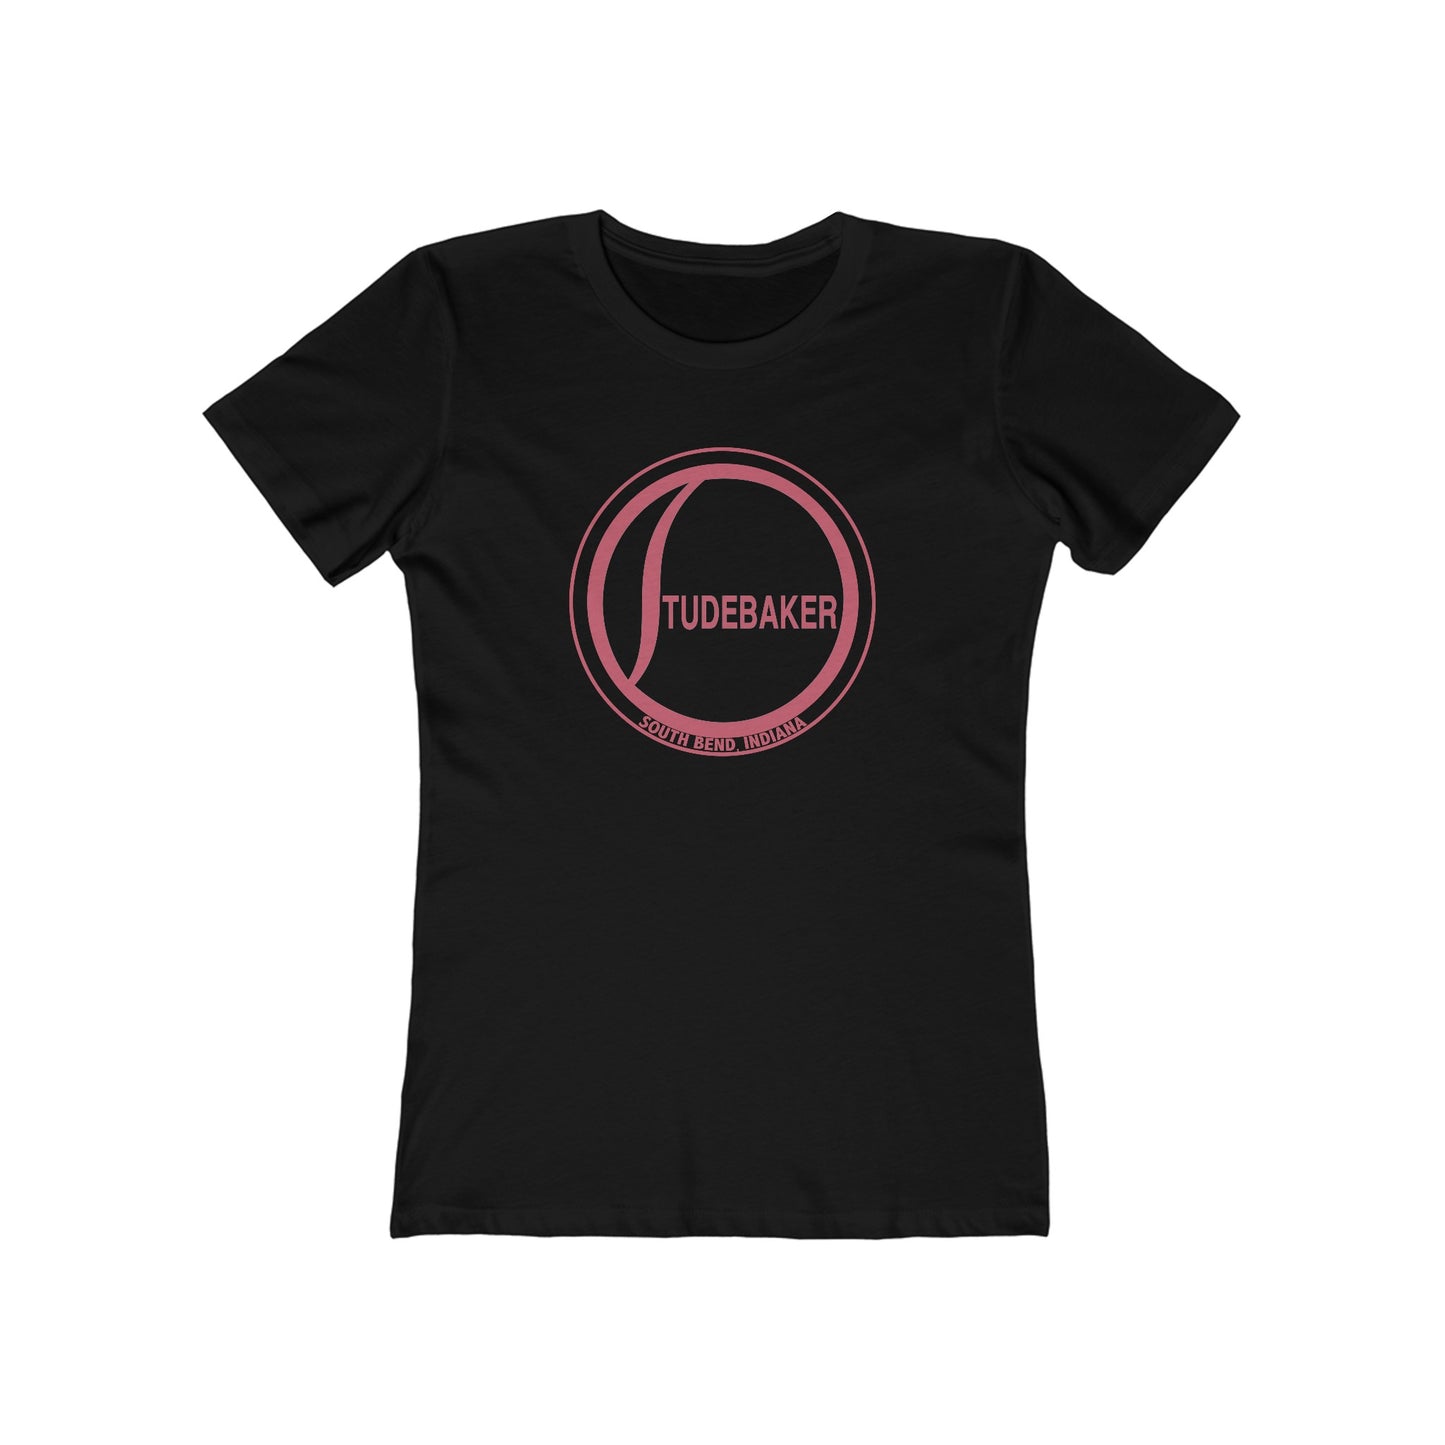 Studebaker - South Bend Classic Car - Women's T-shirt